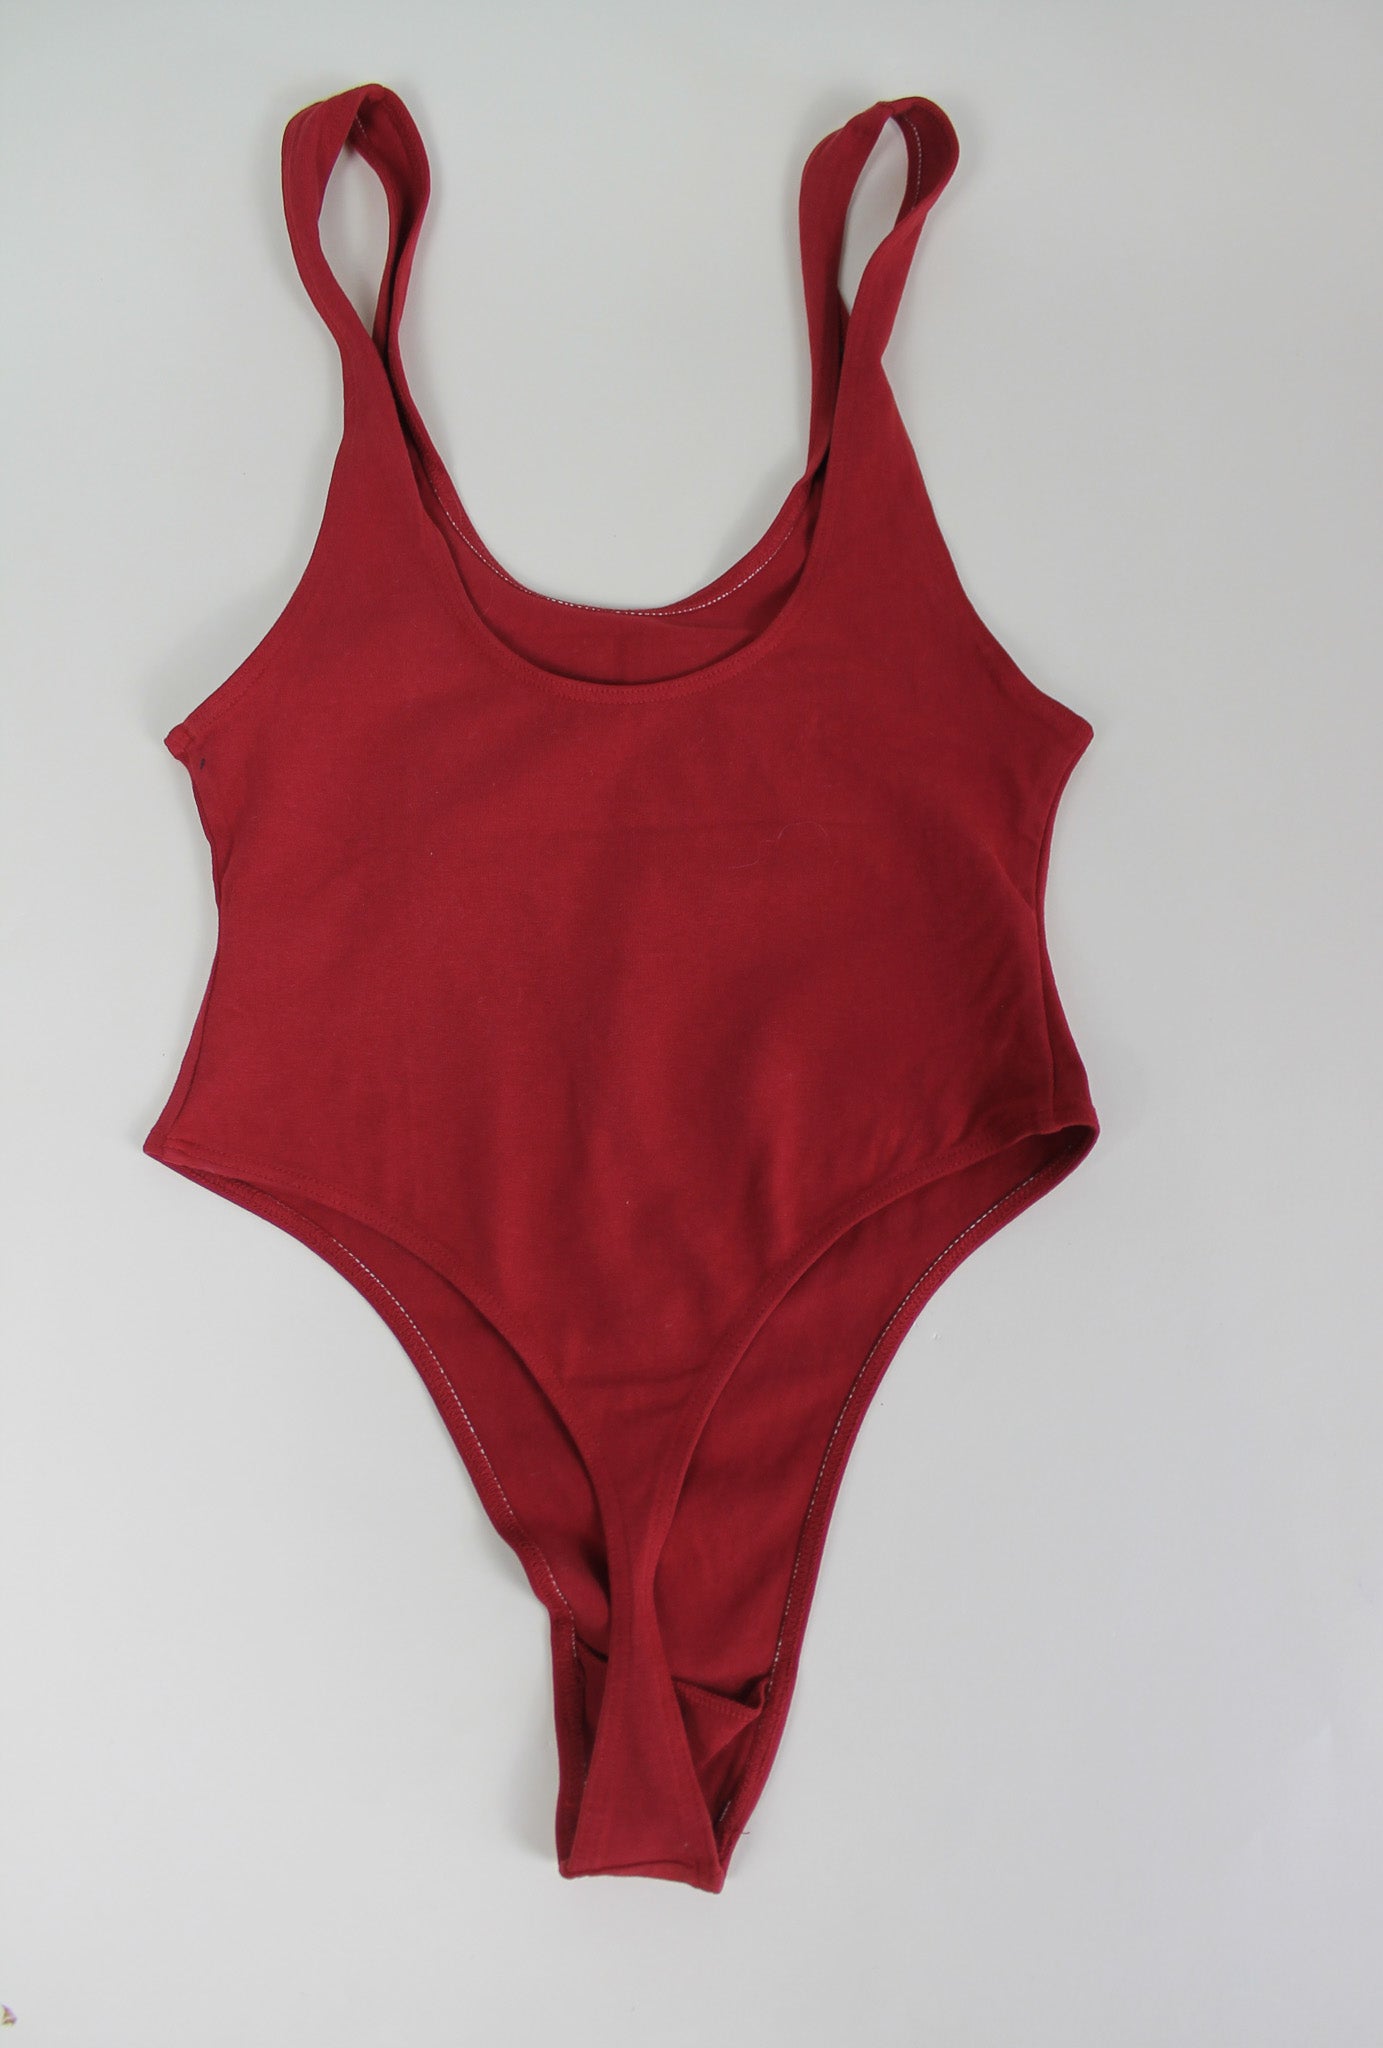 NE Patch Bodysuit - Red